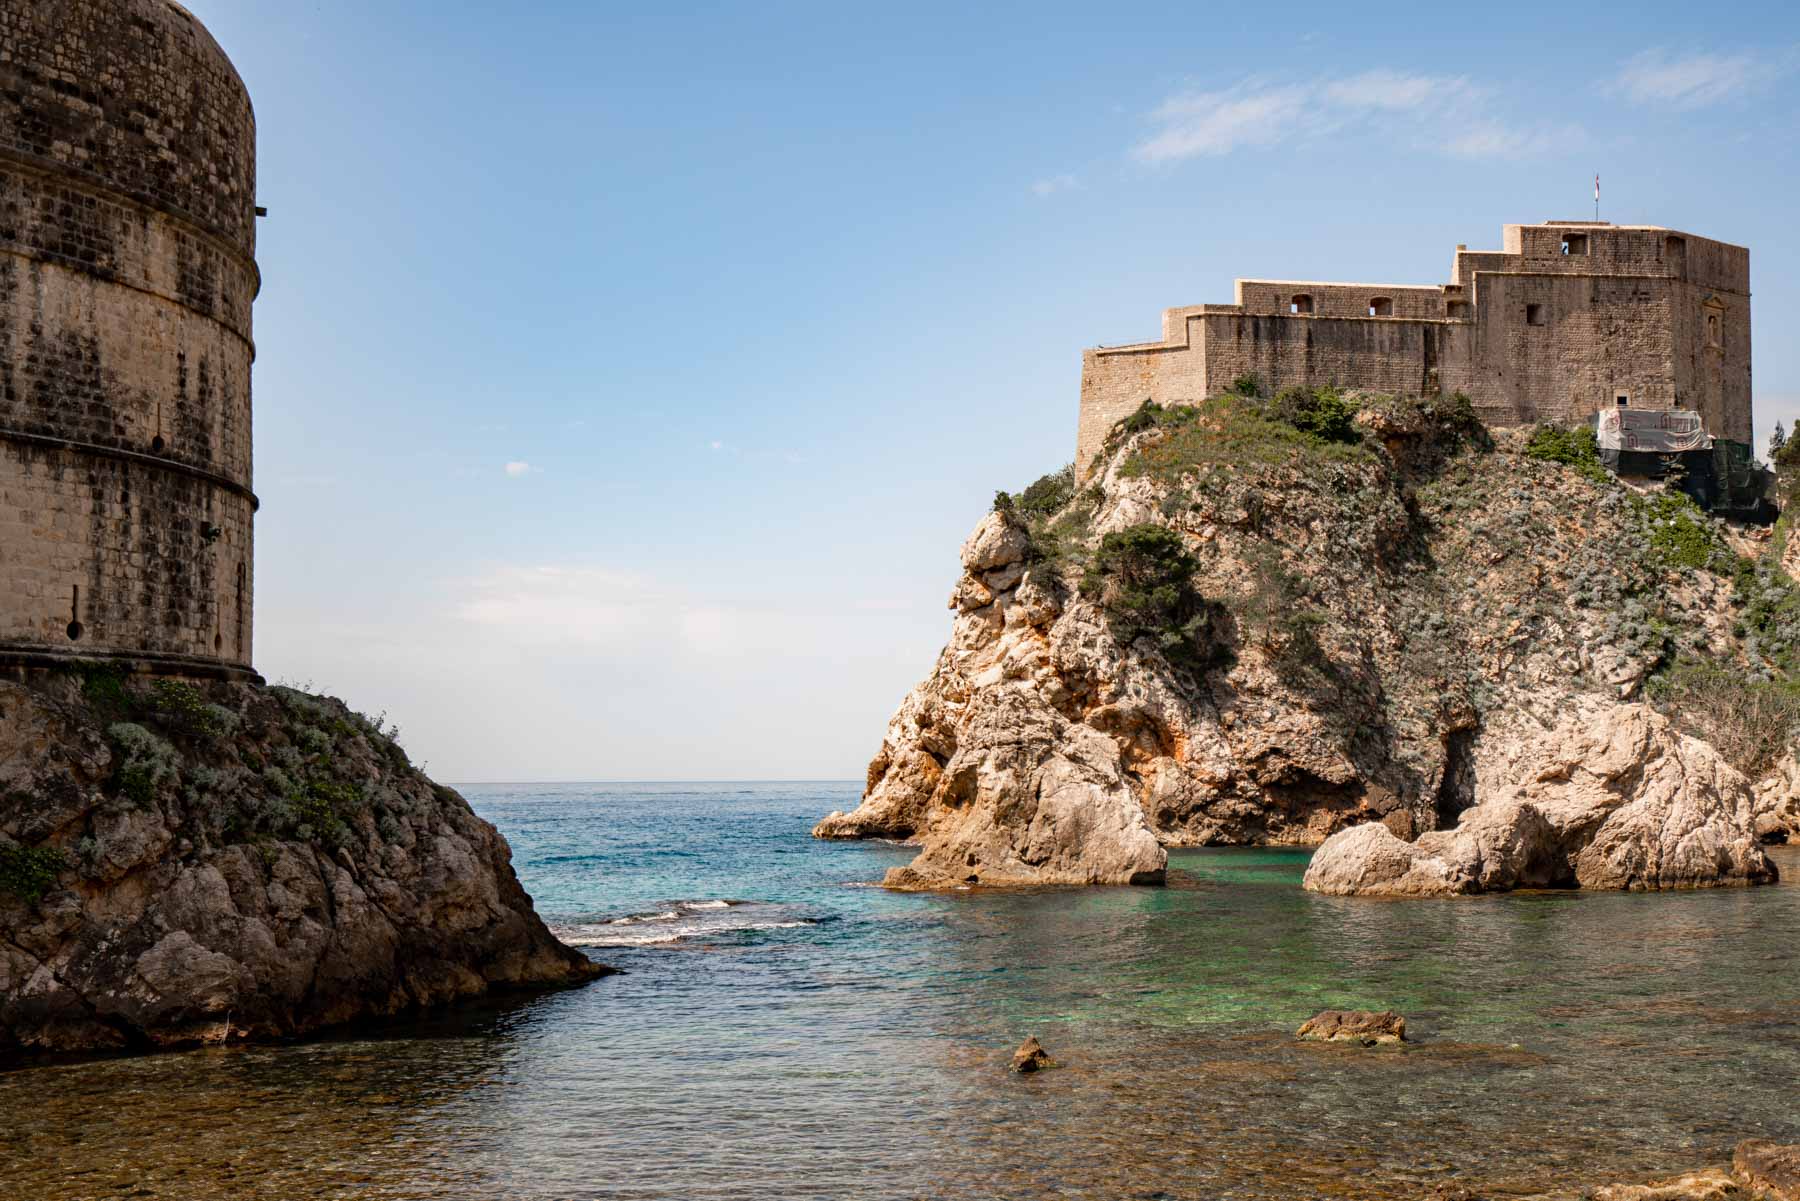 Game of Thrones Dubrovnik 
Blackwater Bay Dubrovnik